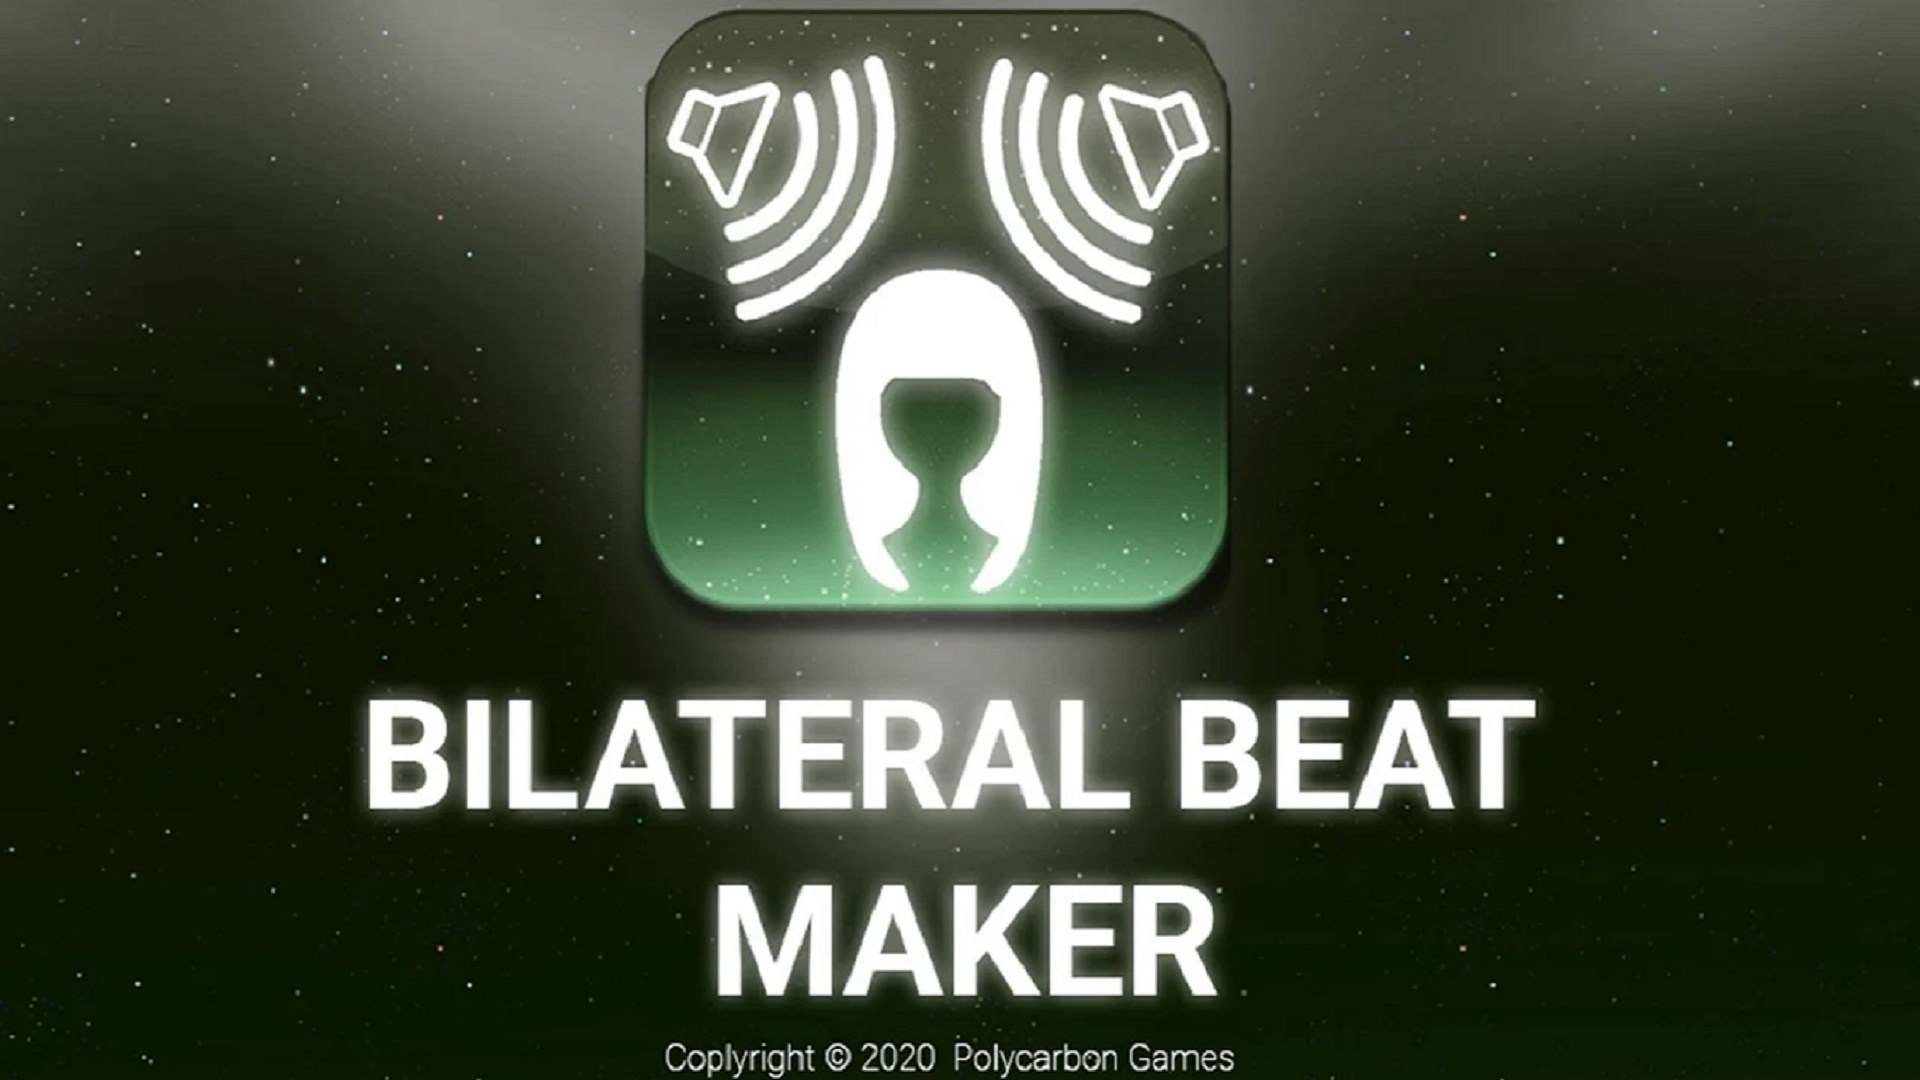 beat maker buy